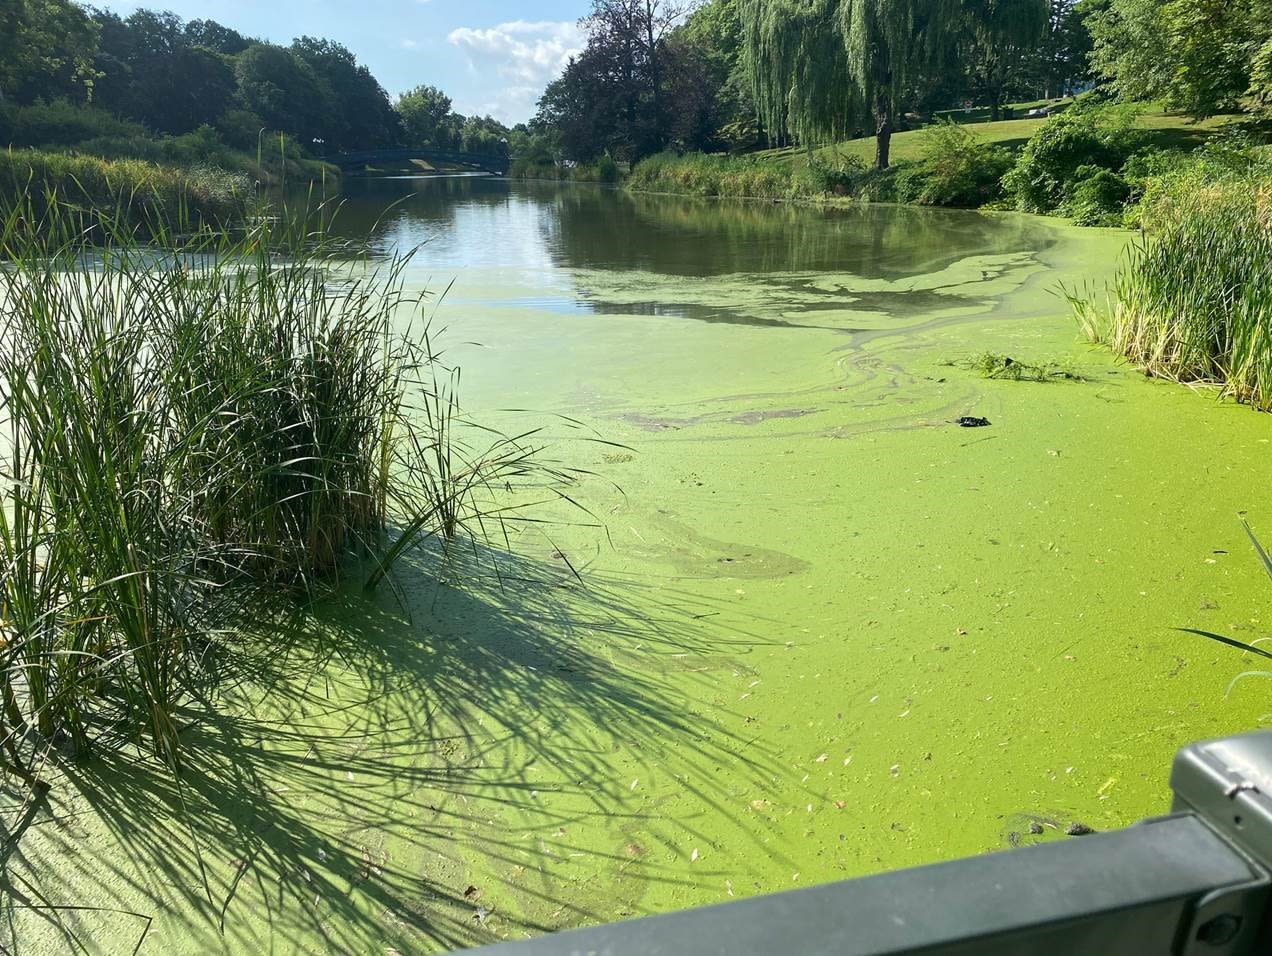 Albany officials warn of harmful algae blooms in Washington Park Lake